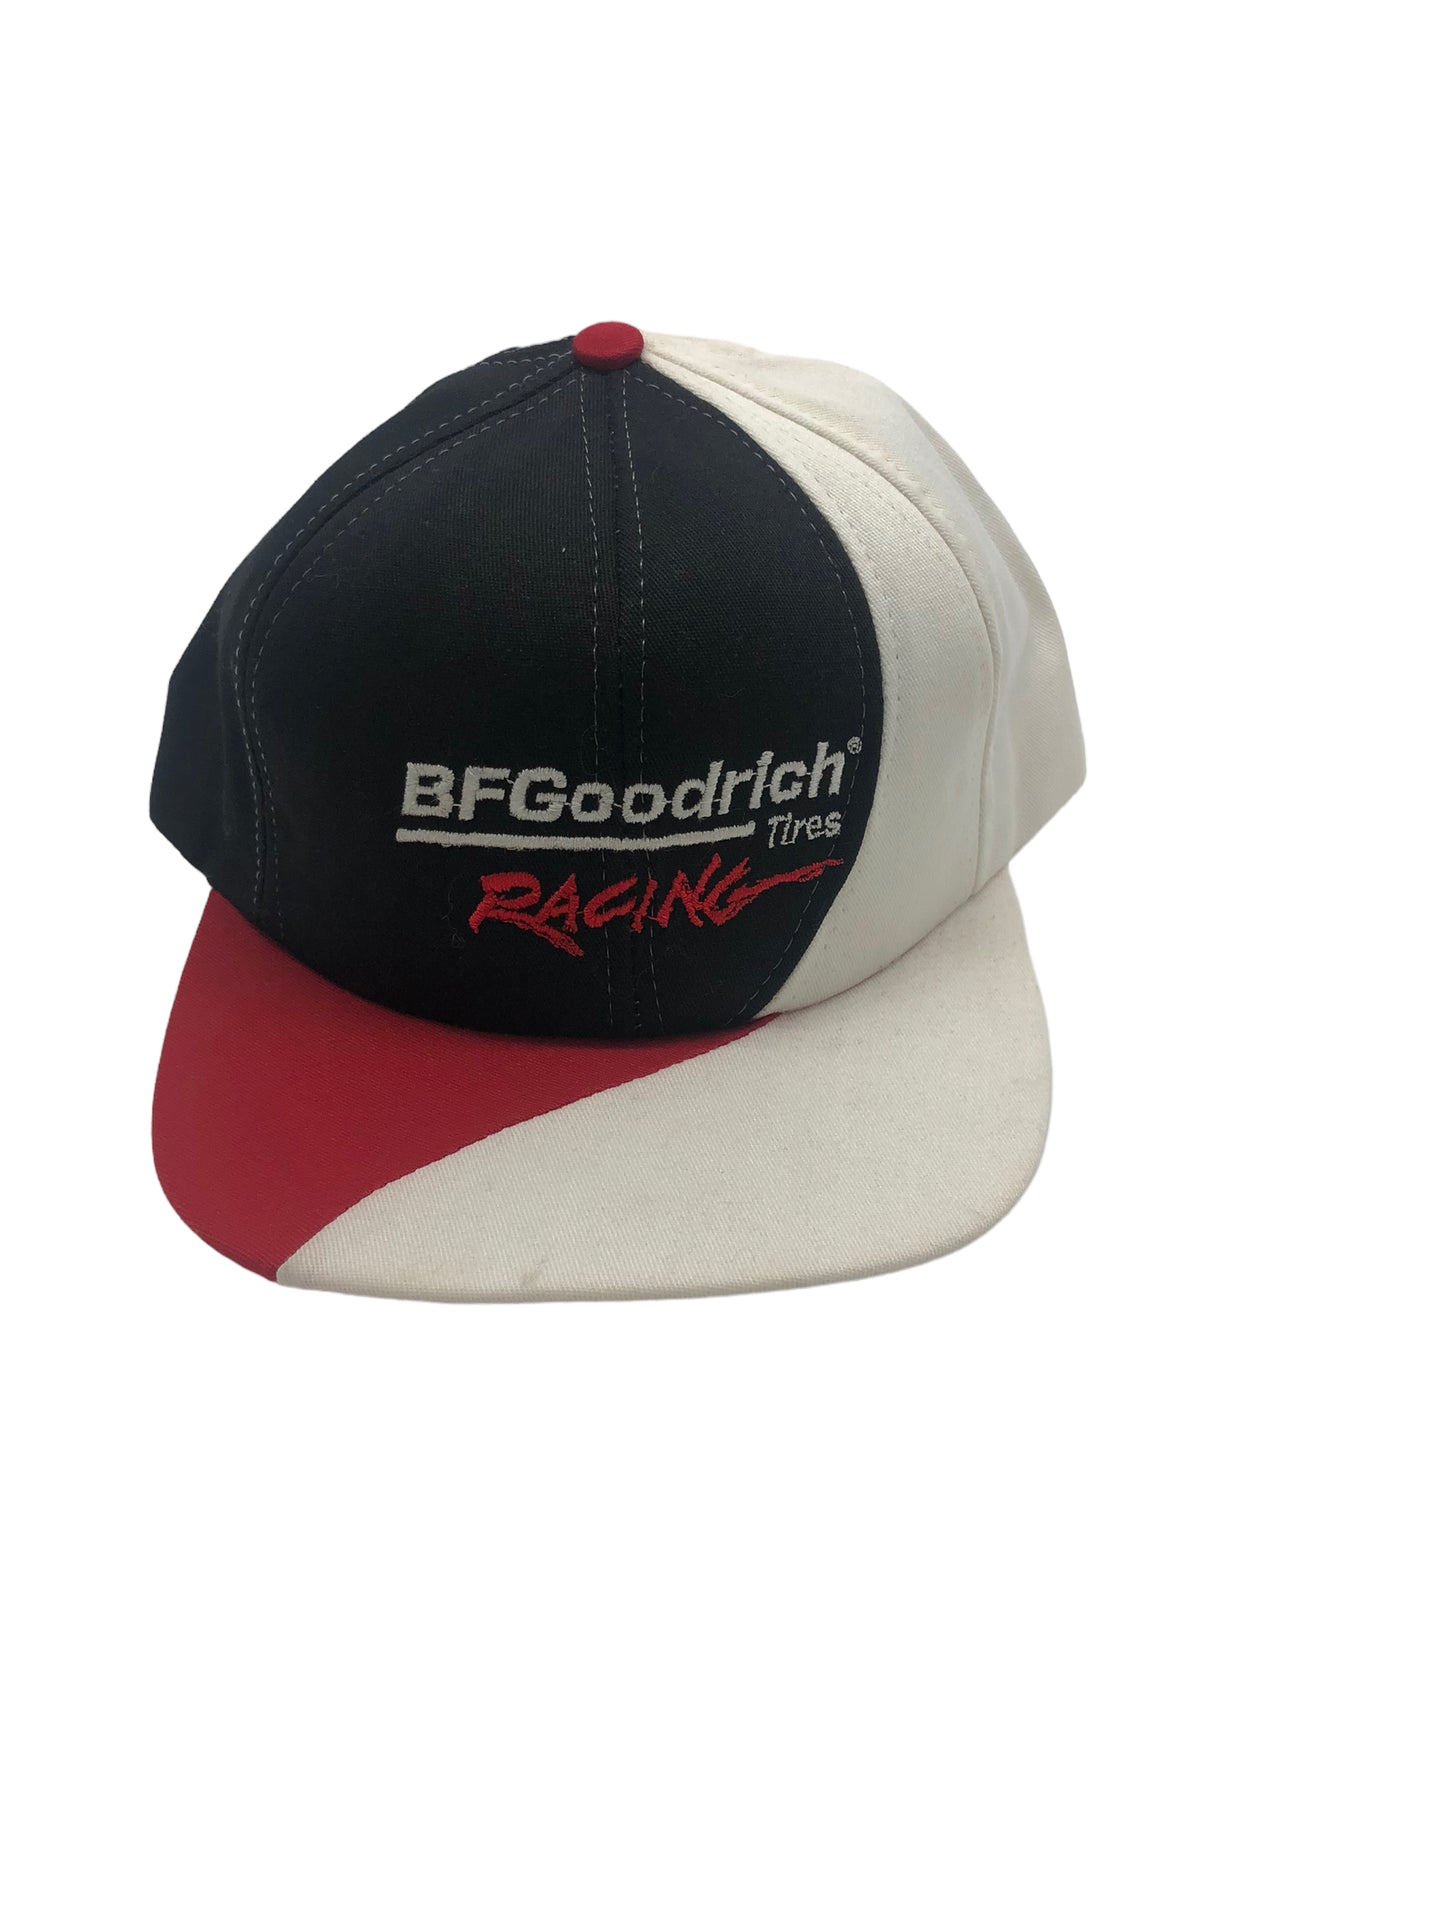 VTG BFGoodrich Racing Tires Snapback Hat